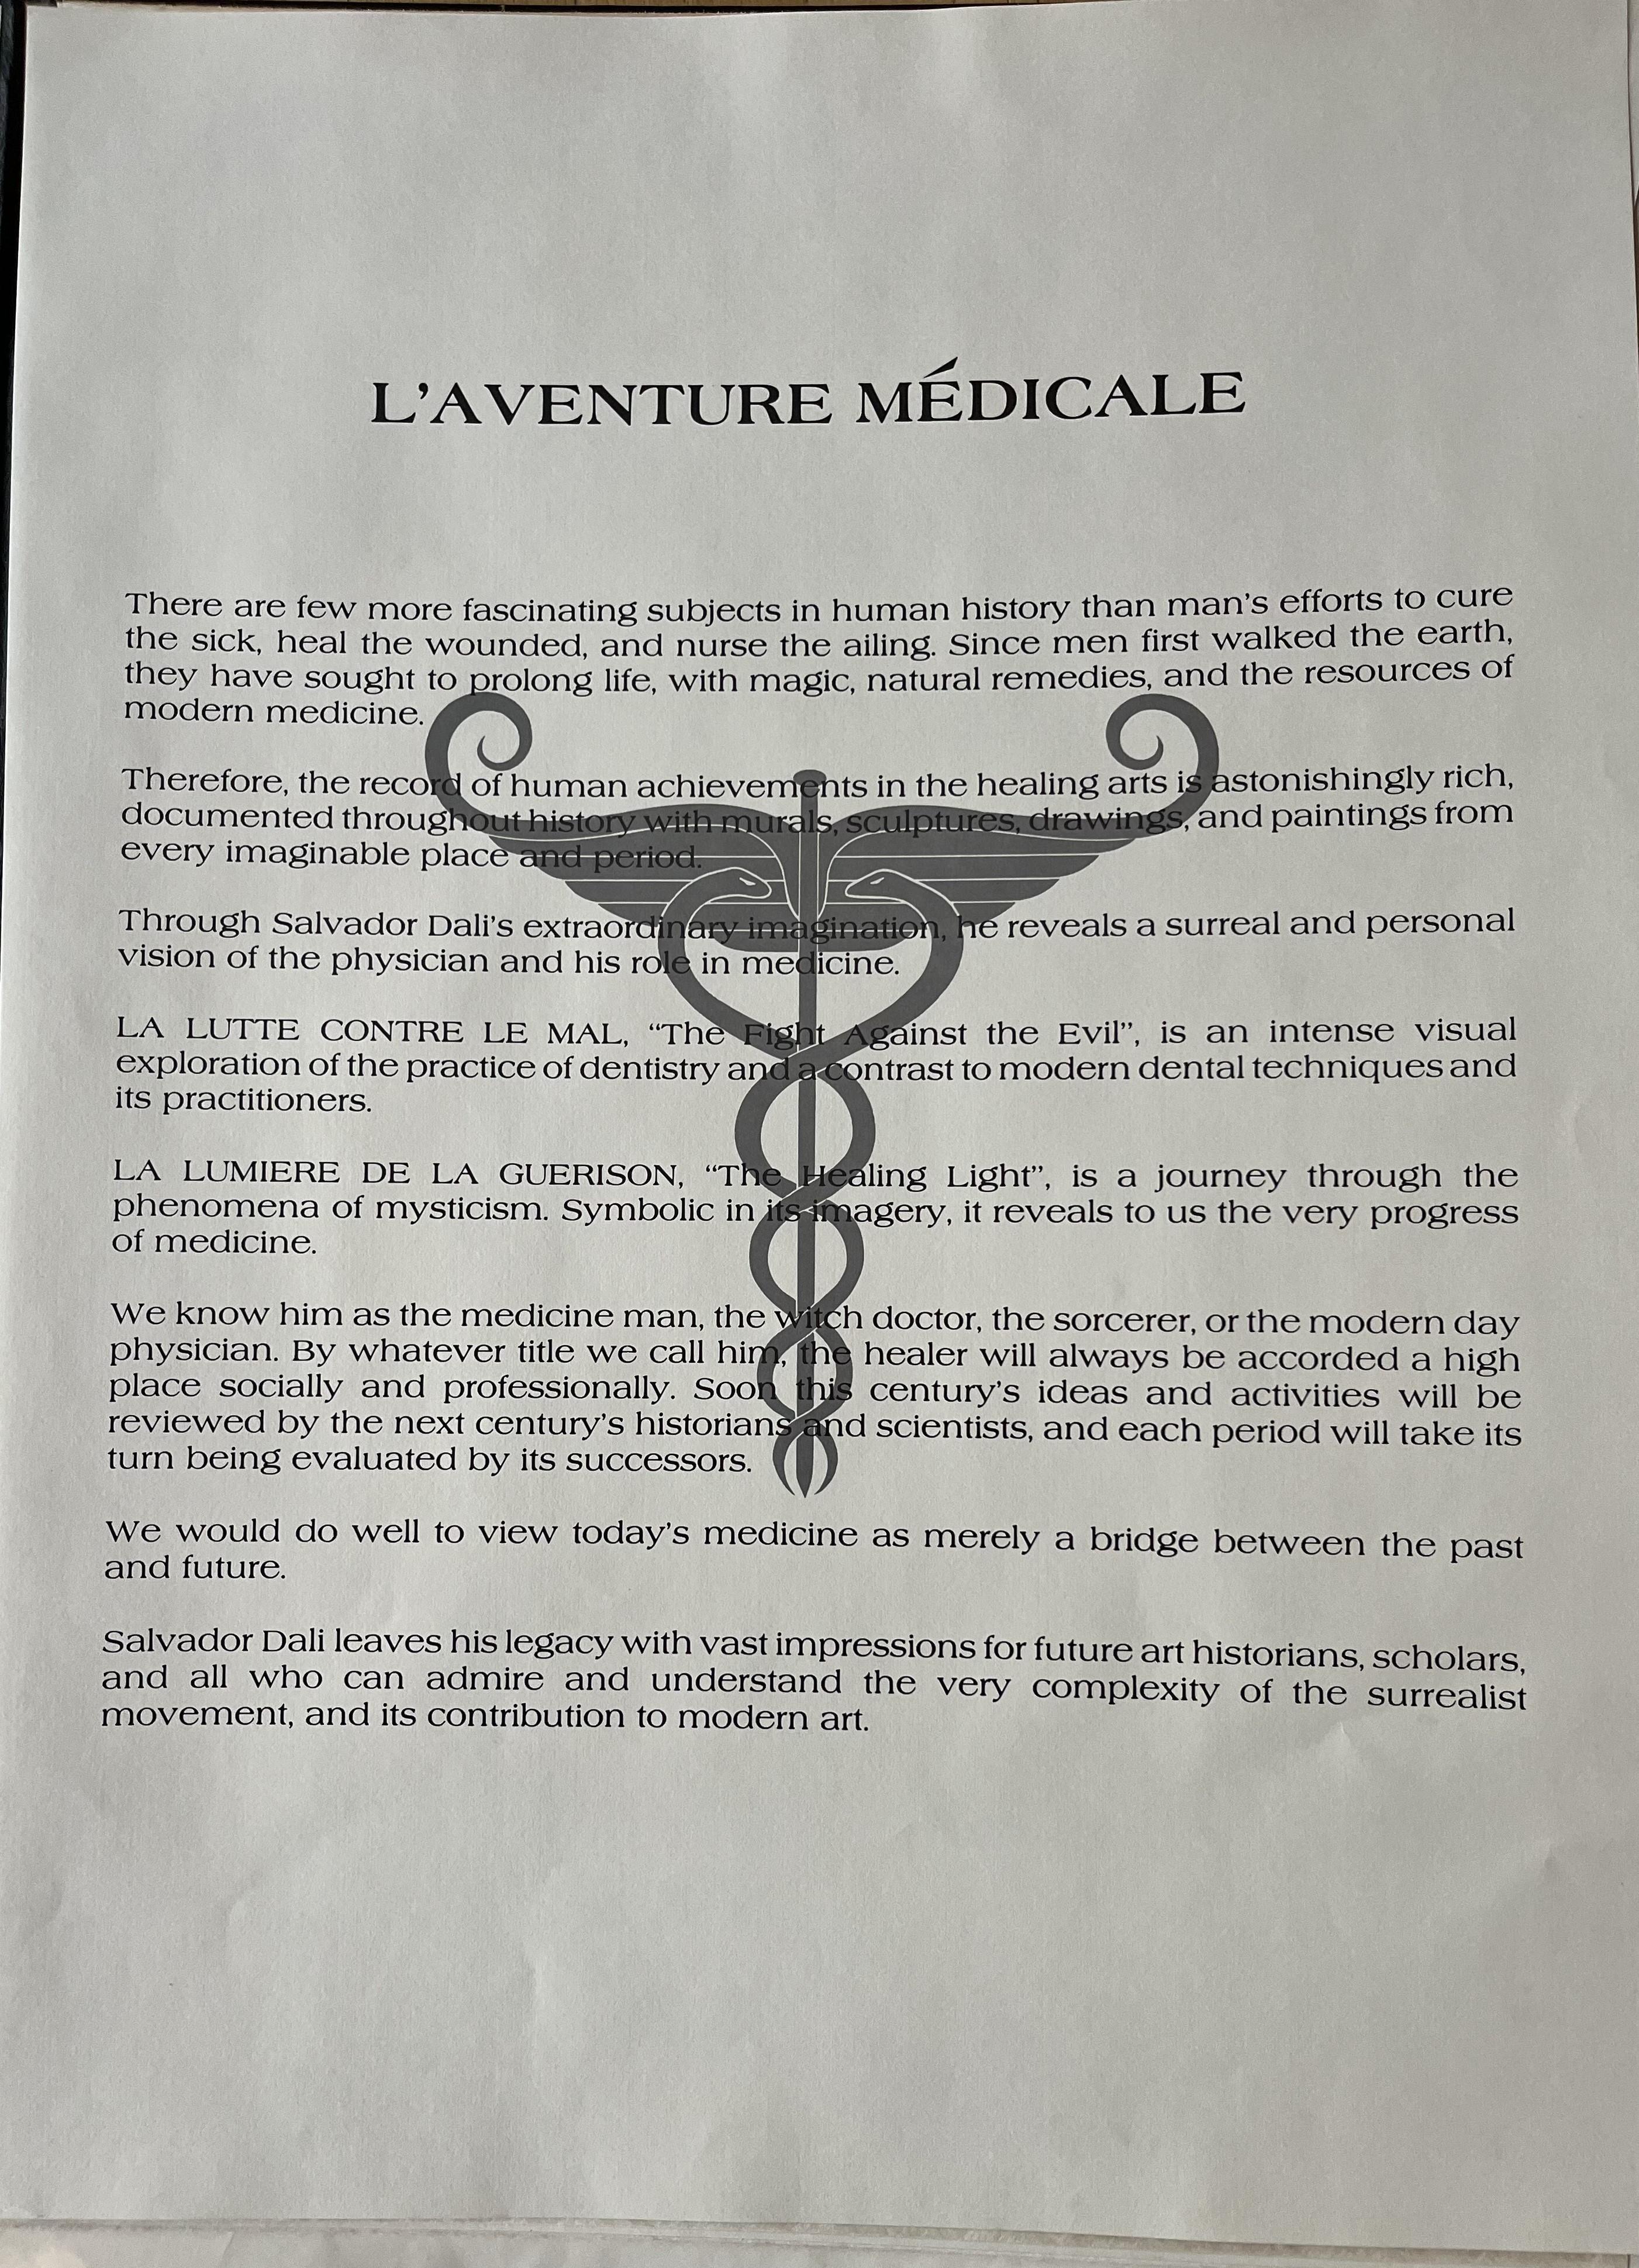 The Doctor & Dentist Medical Suite (L'Aventure Medicale) - Surrealist Print by Salvador Dalí